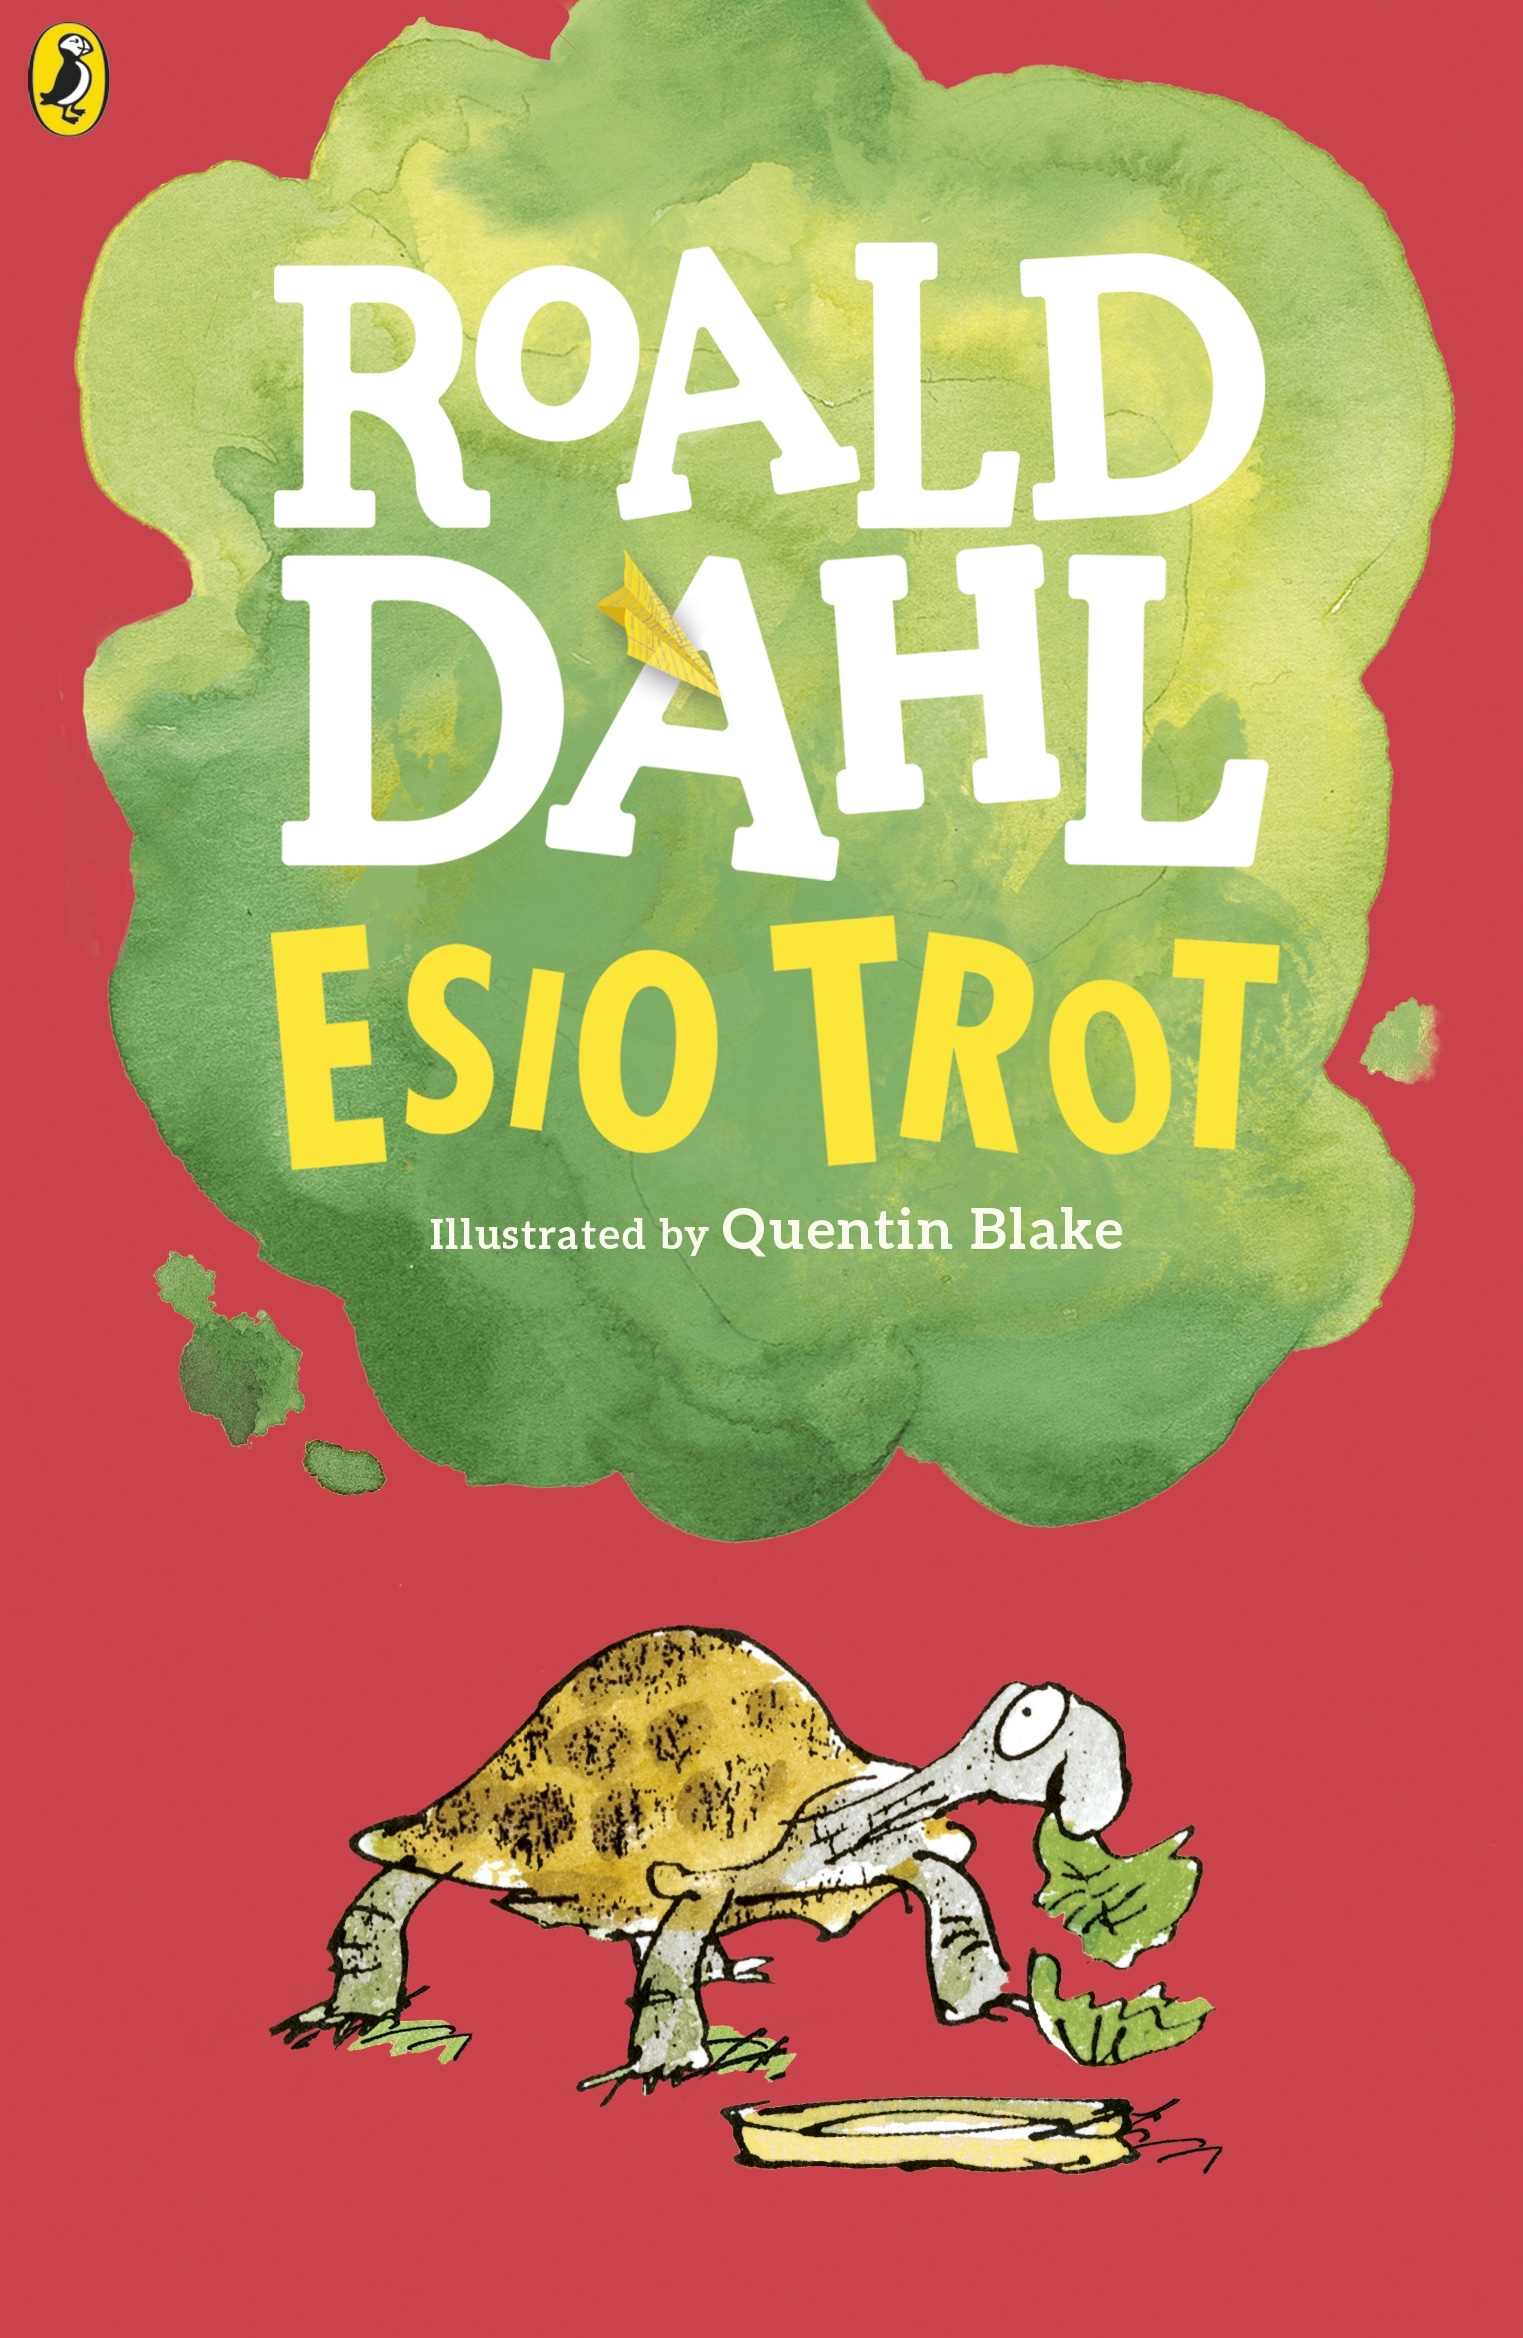 Book “Esio Trot” by Roald Dahl — February 11, 2016